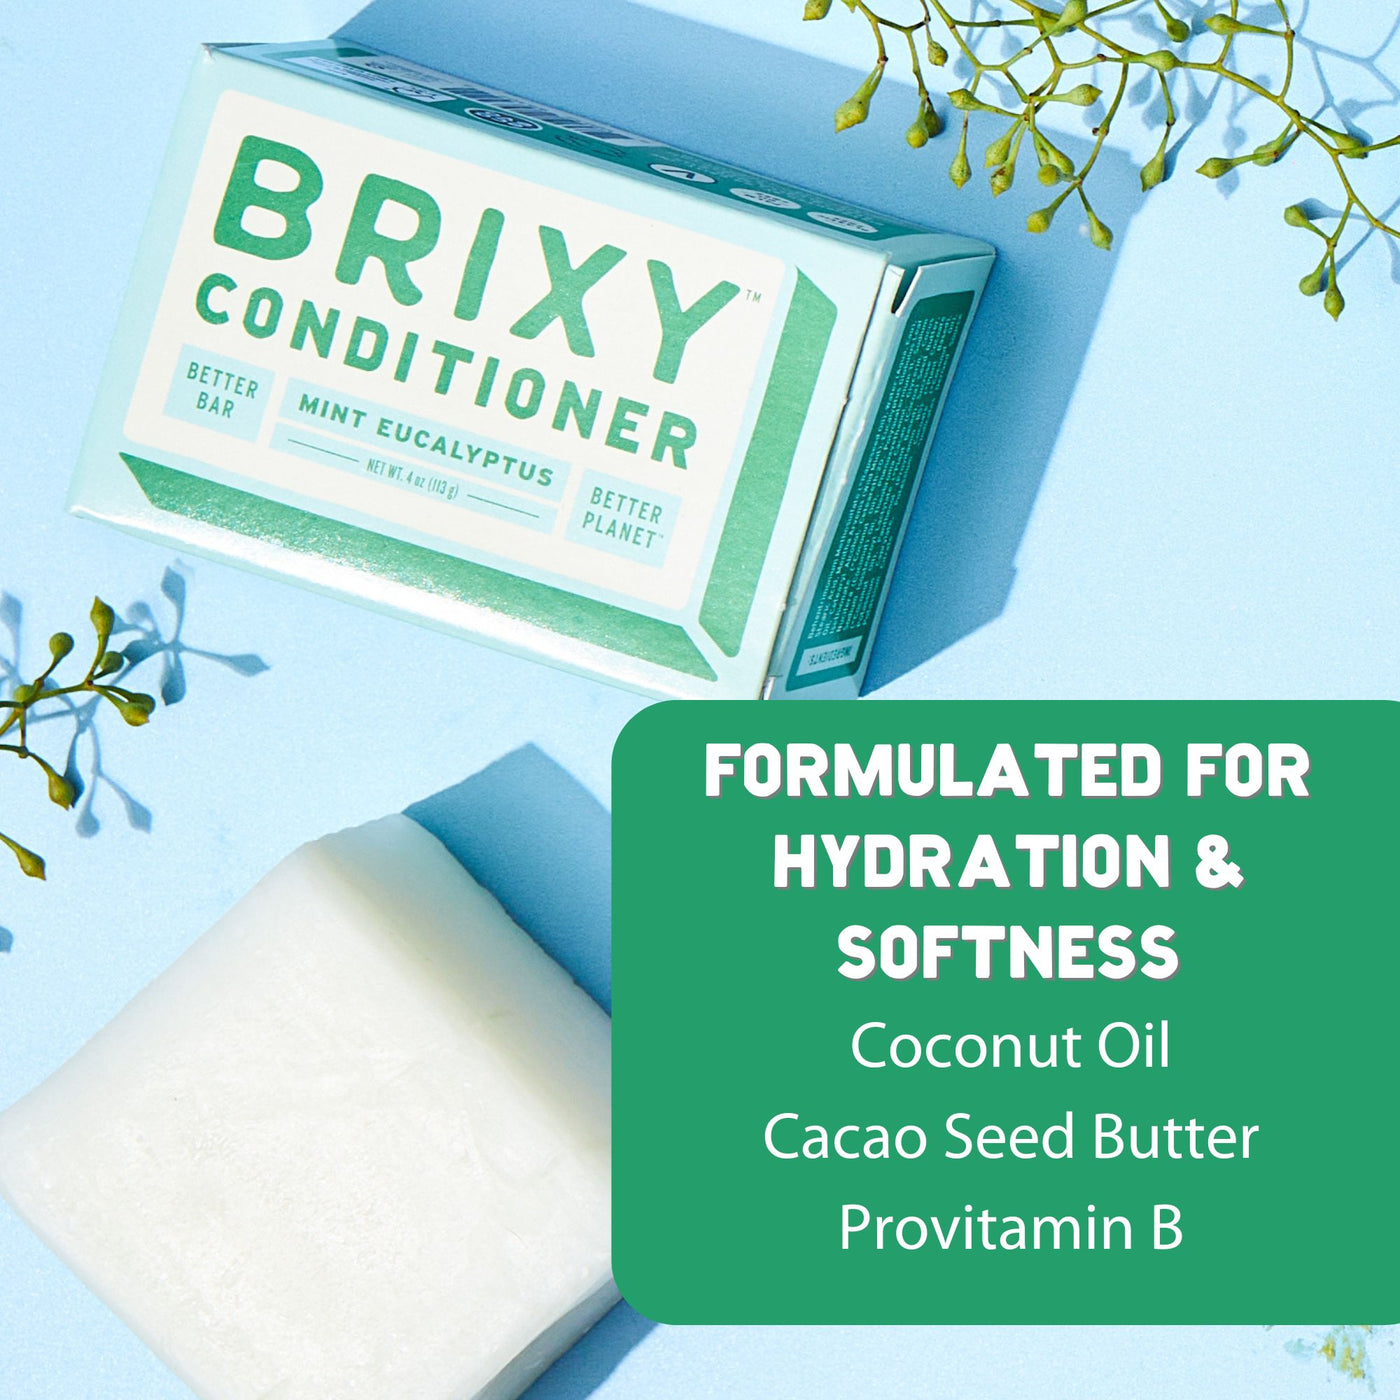 Hydrating Conditioner Bar - Mint Eucalyptus - BRIXY